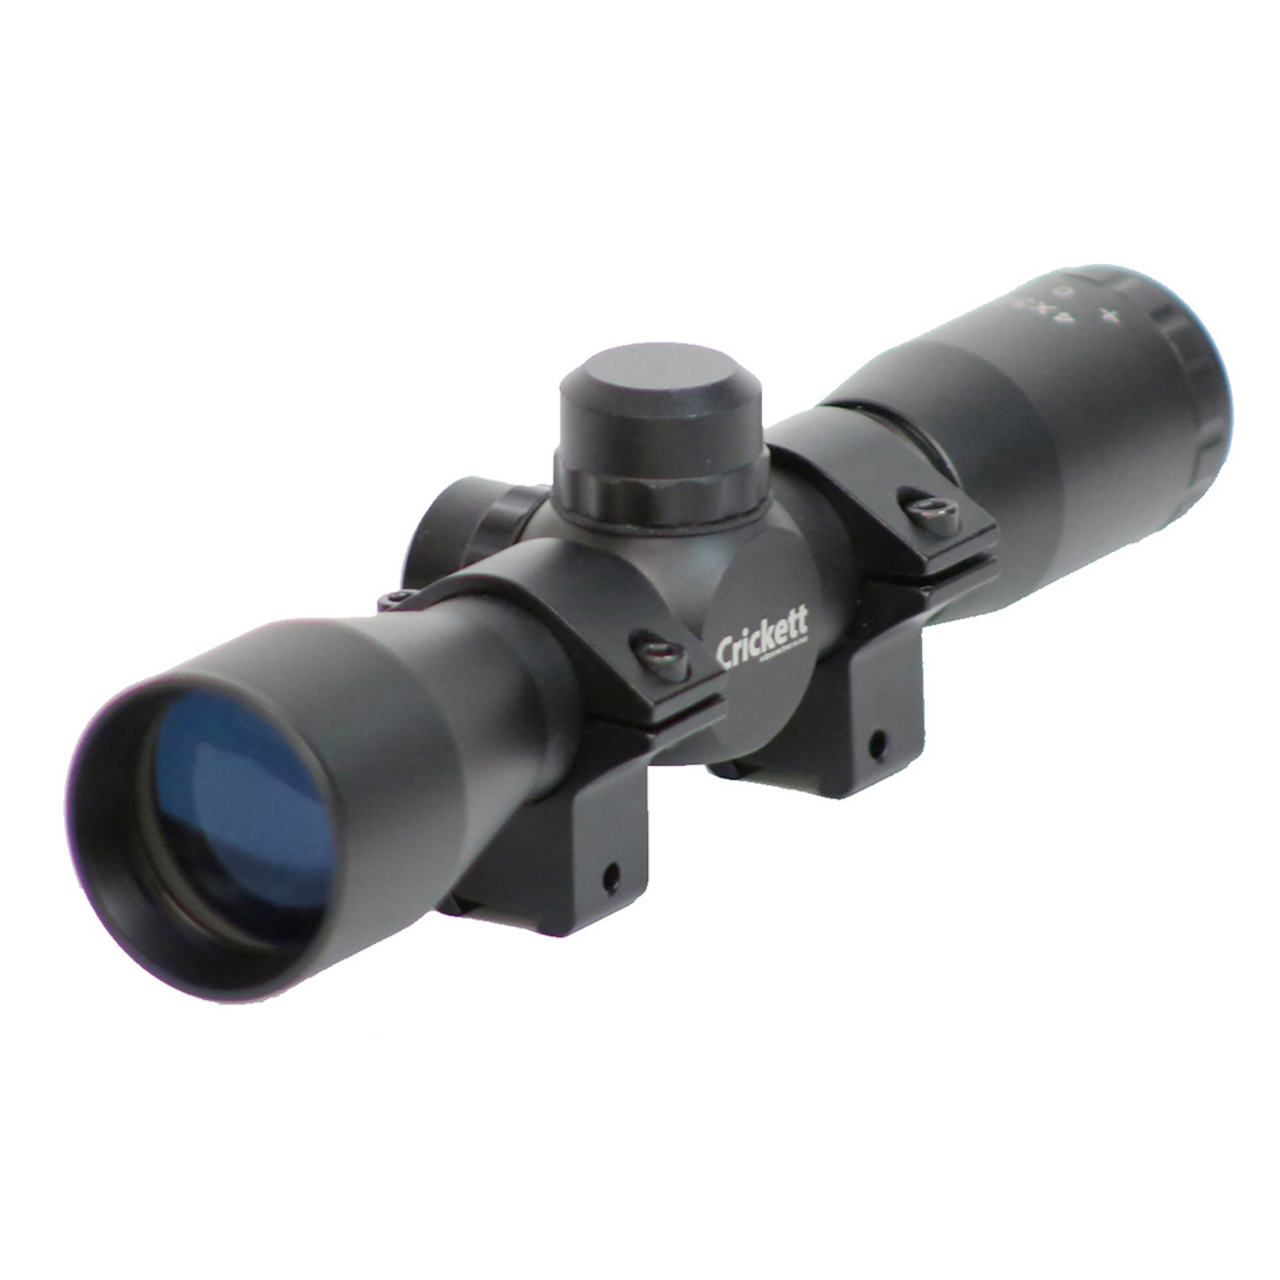 Keystone Crickett Quick Focus Riflescope, 4x32mm, Mil-Dot, Matte, 1" Tube